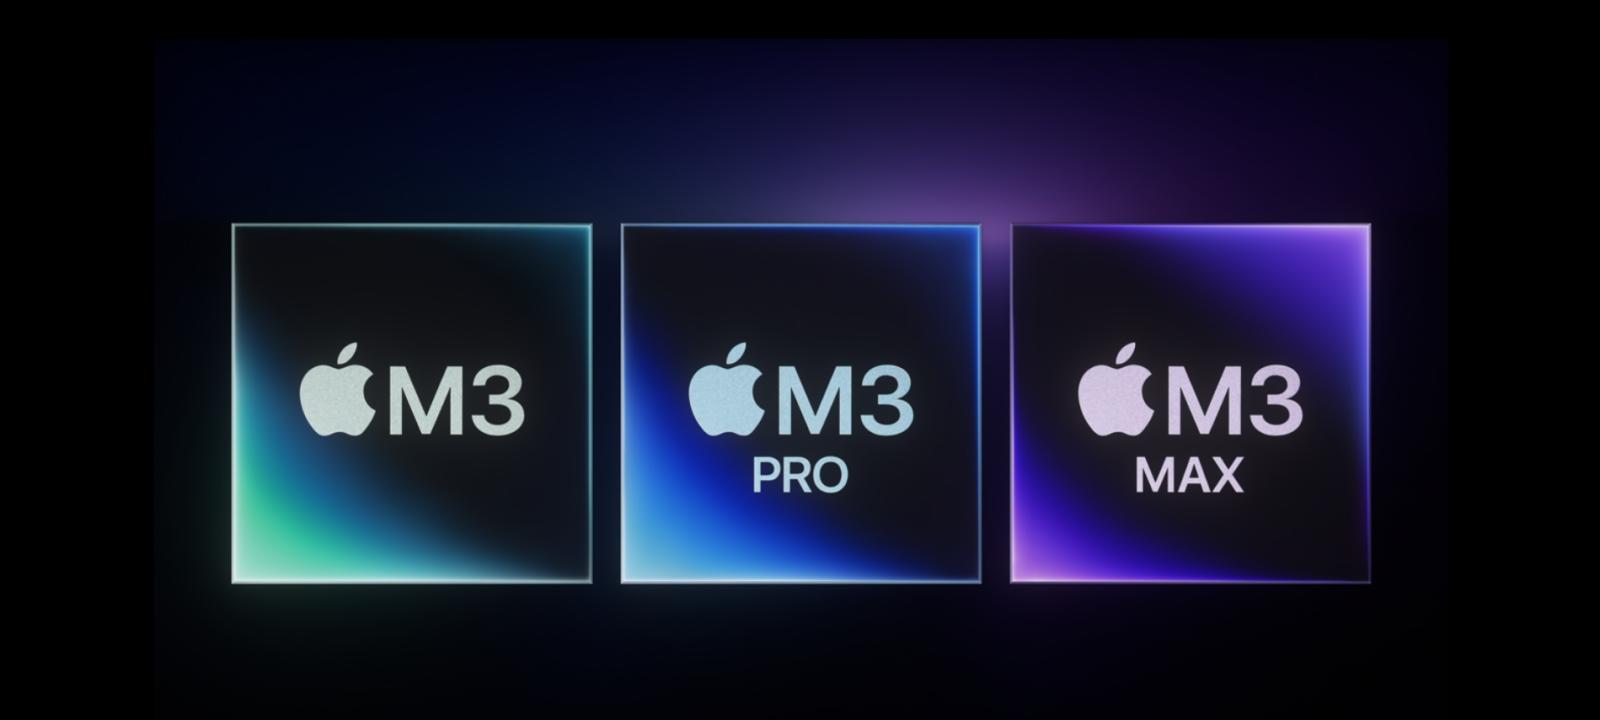 ipad pro รุ่นใหม่ เตรียมข้ามชิป m3 ไปใช้ชิป m4 พร้อมพลัง ai?